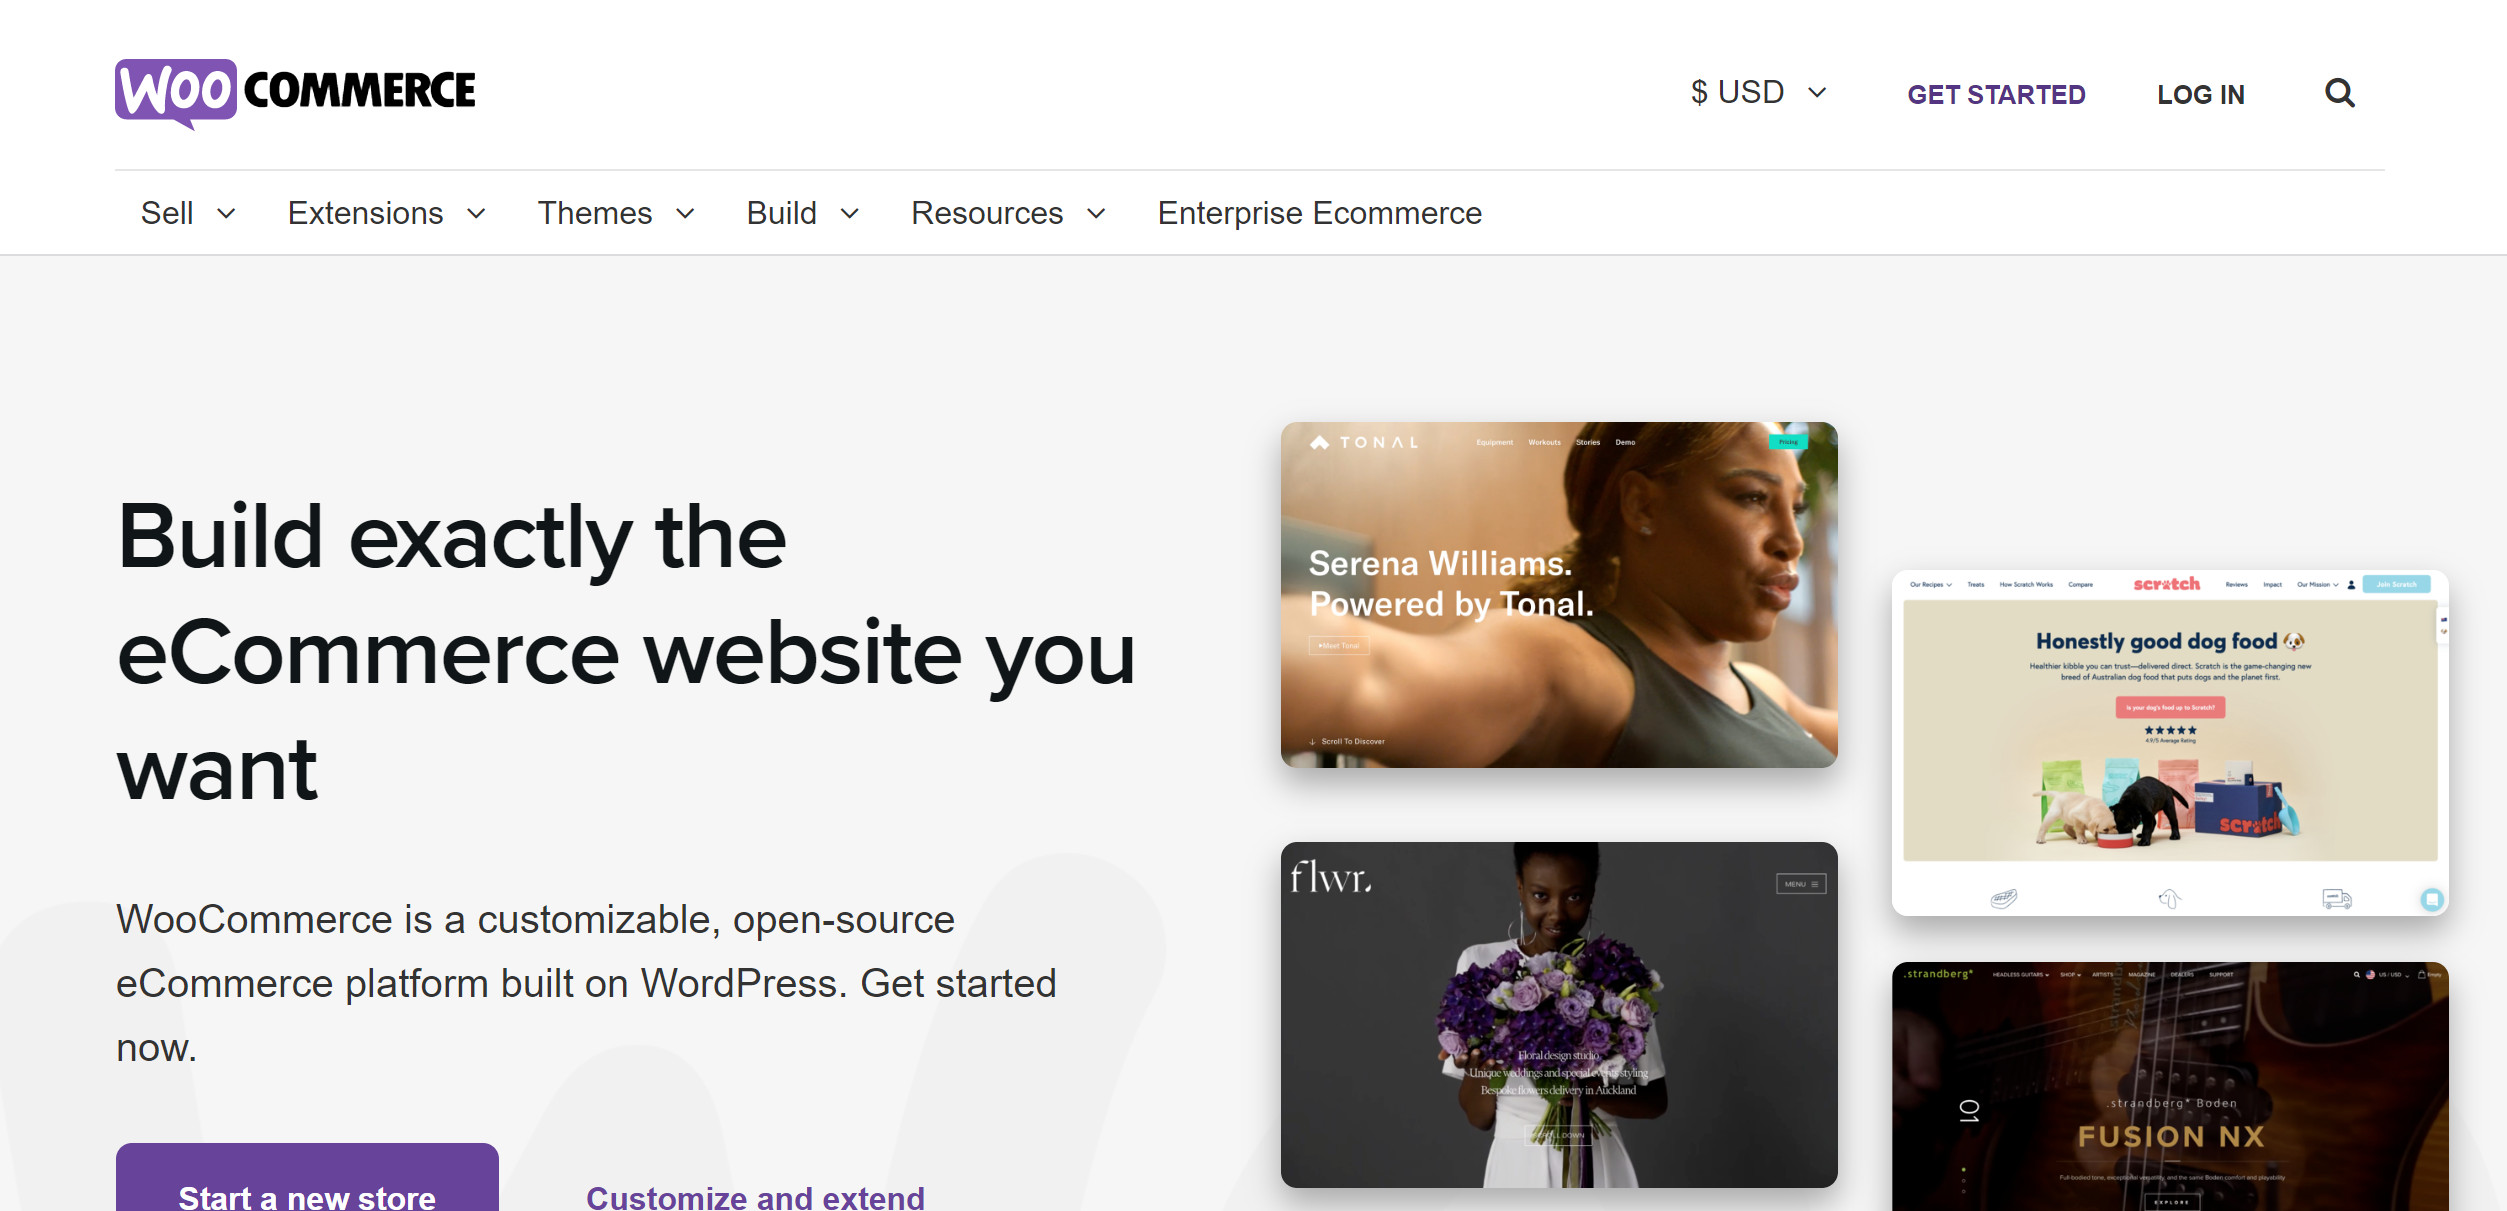 WooCommerce - Open source website to build ecommerce platform in Singapore